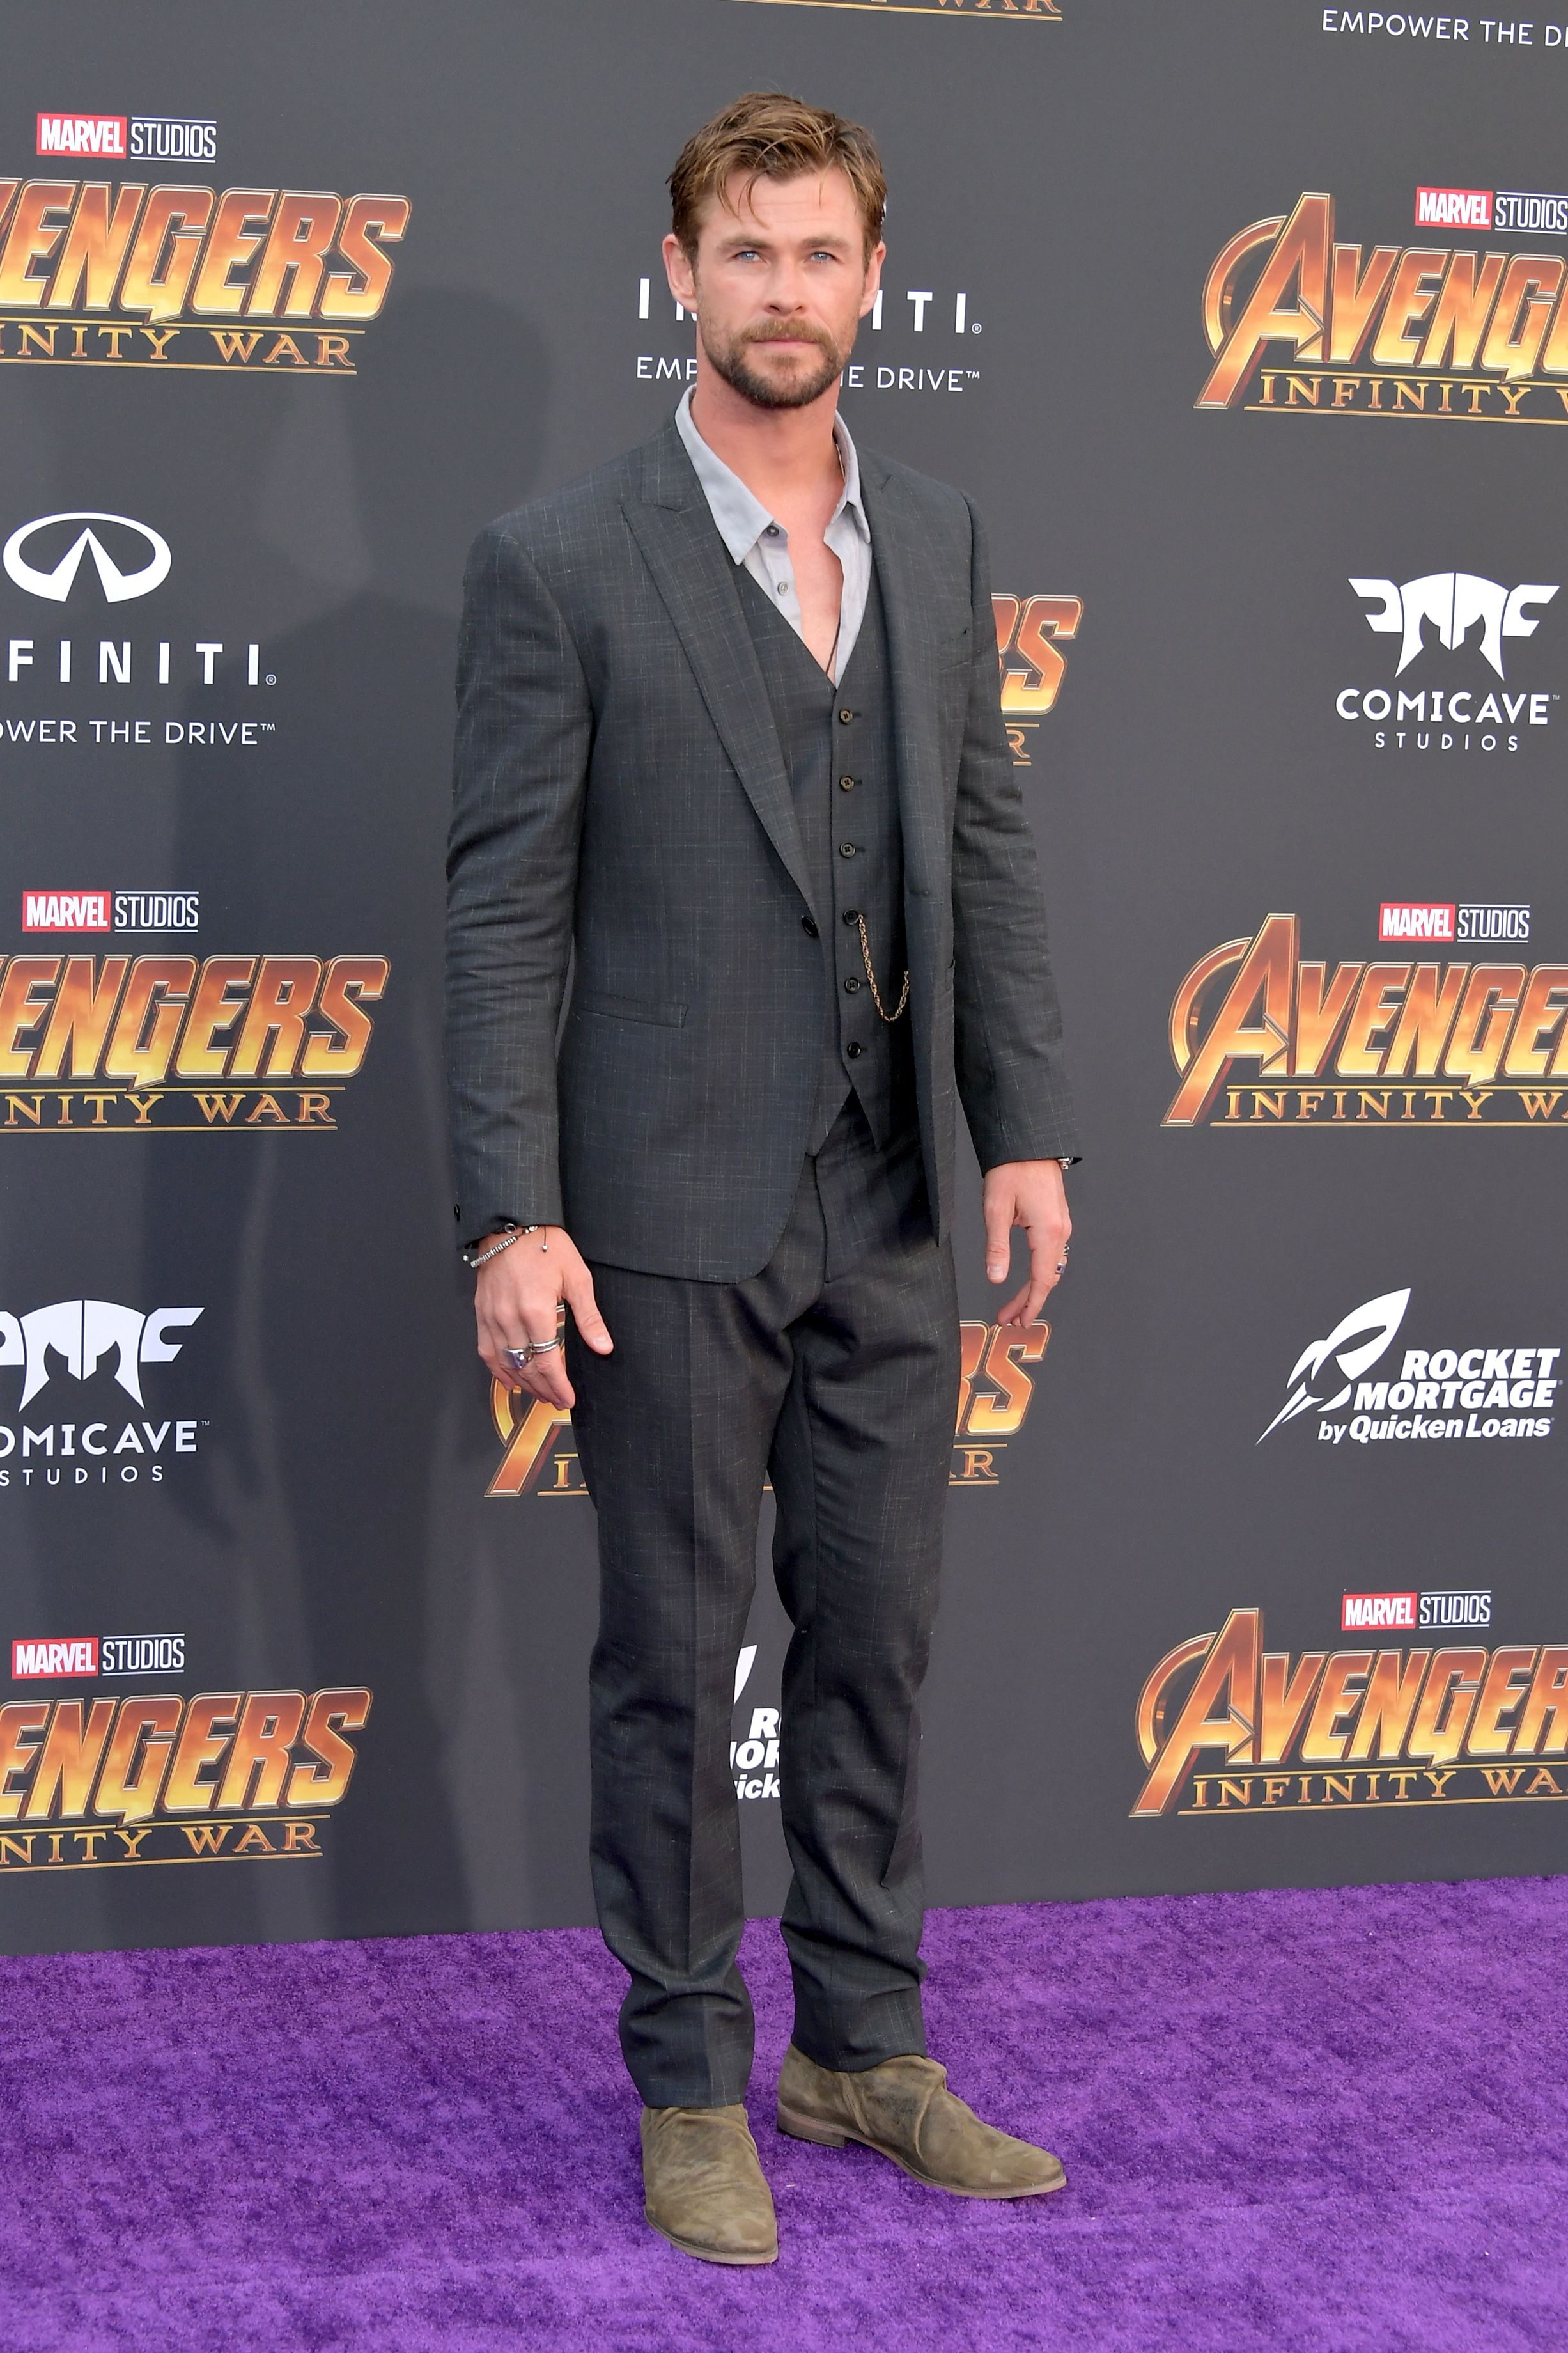 petulance har en finger i kagen Manners All the Best Looks From the 'Avengers: Infinity War Premiere'